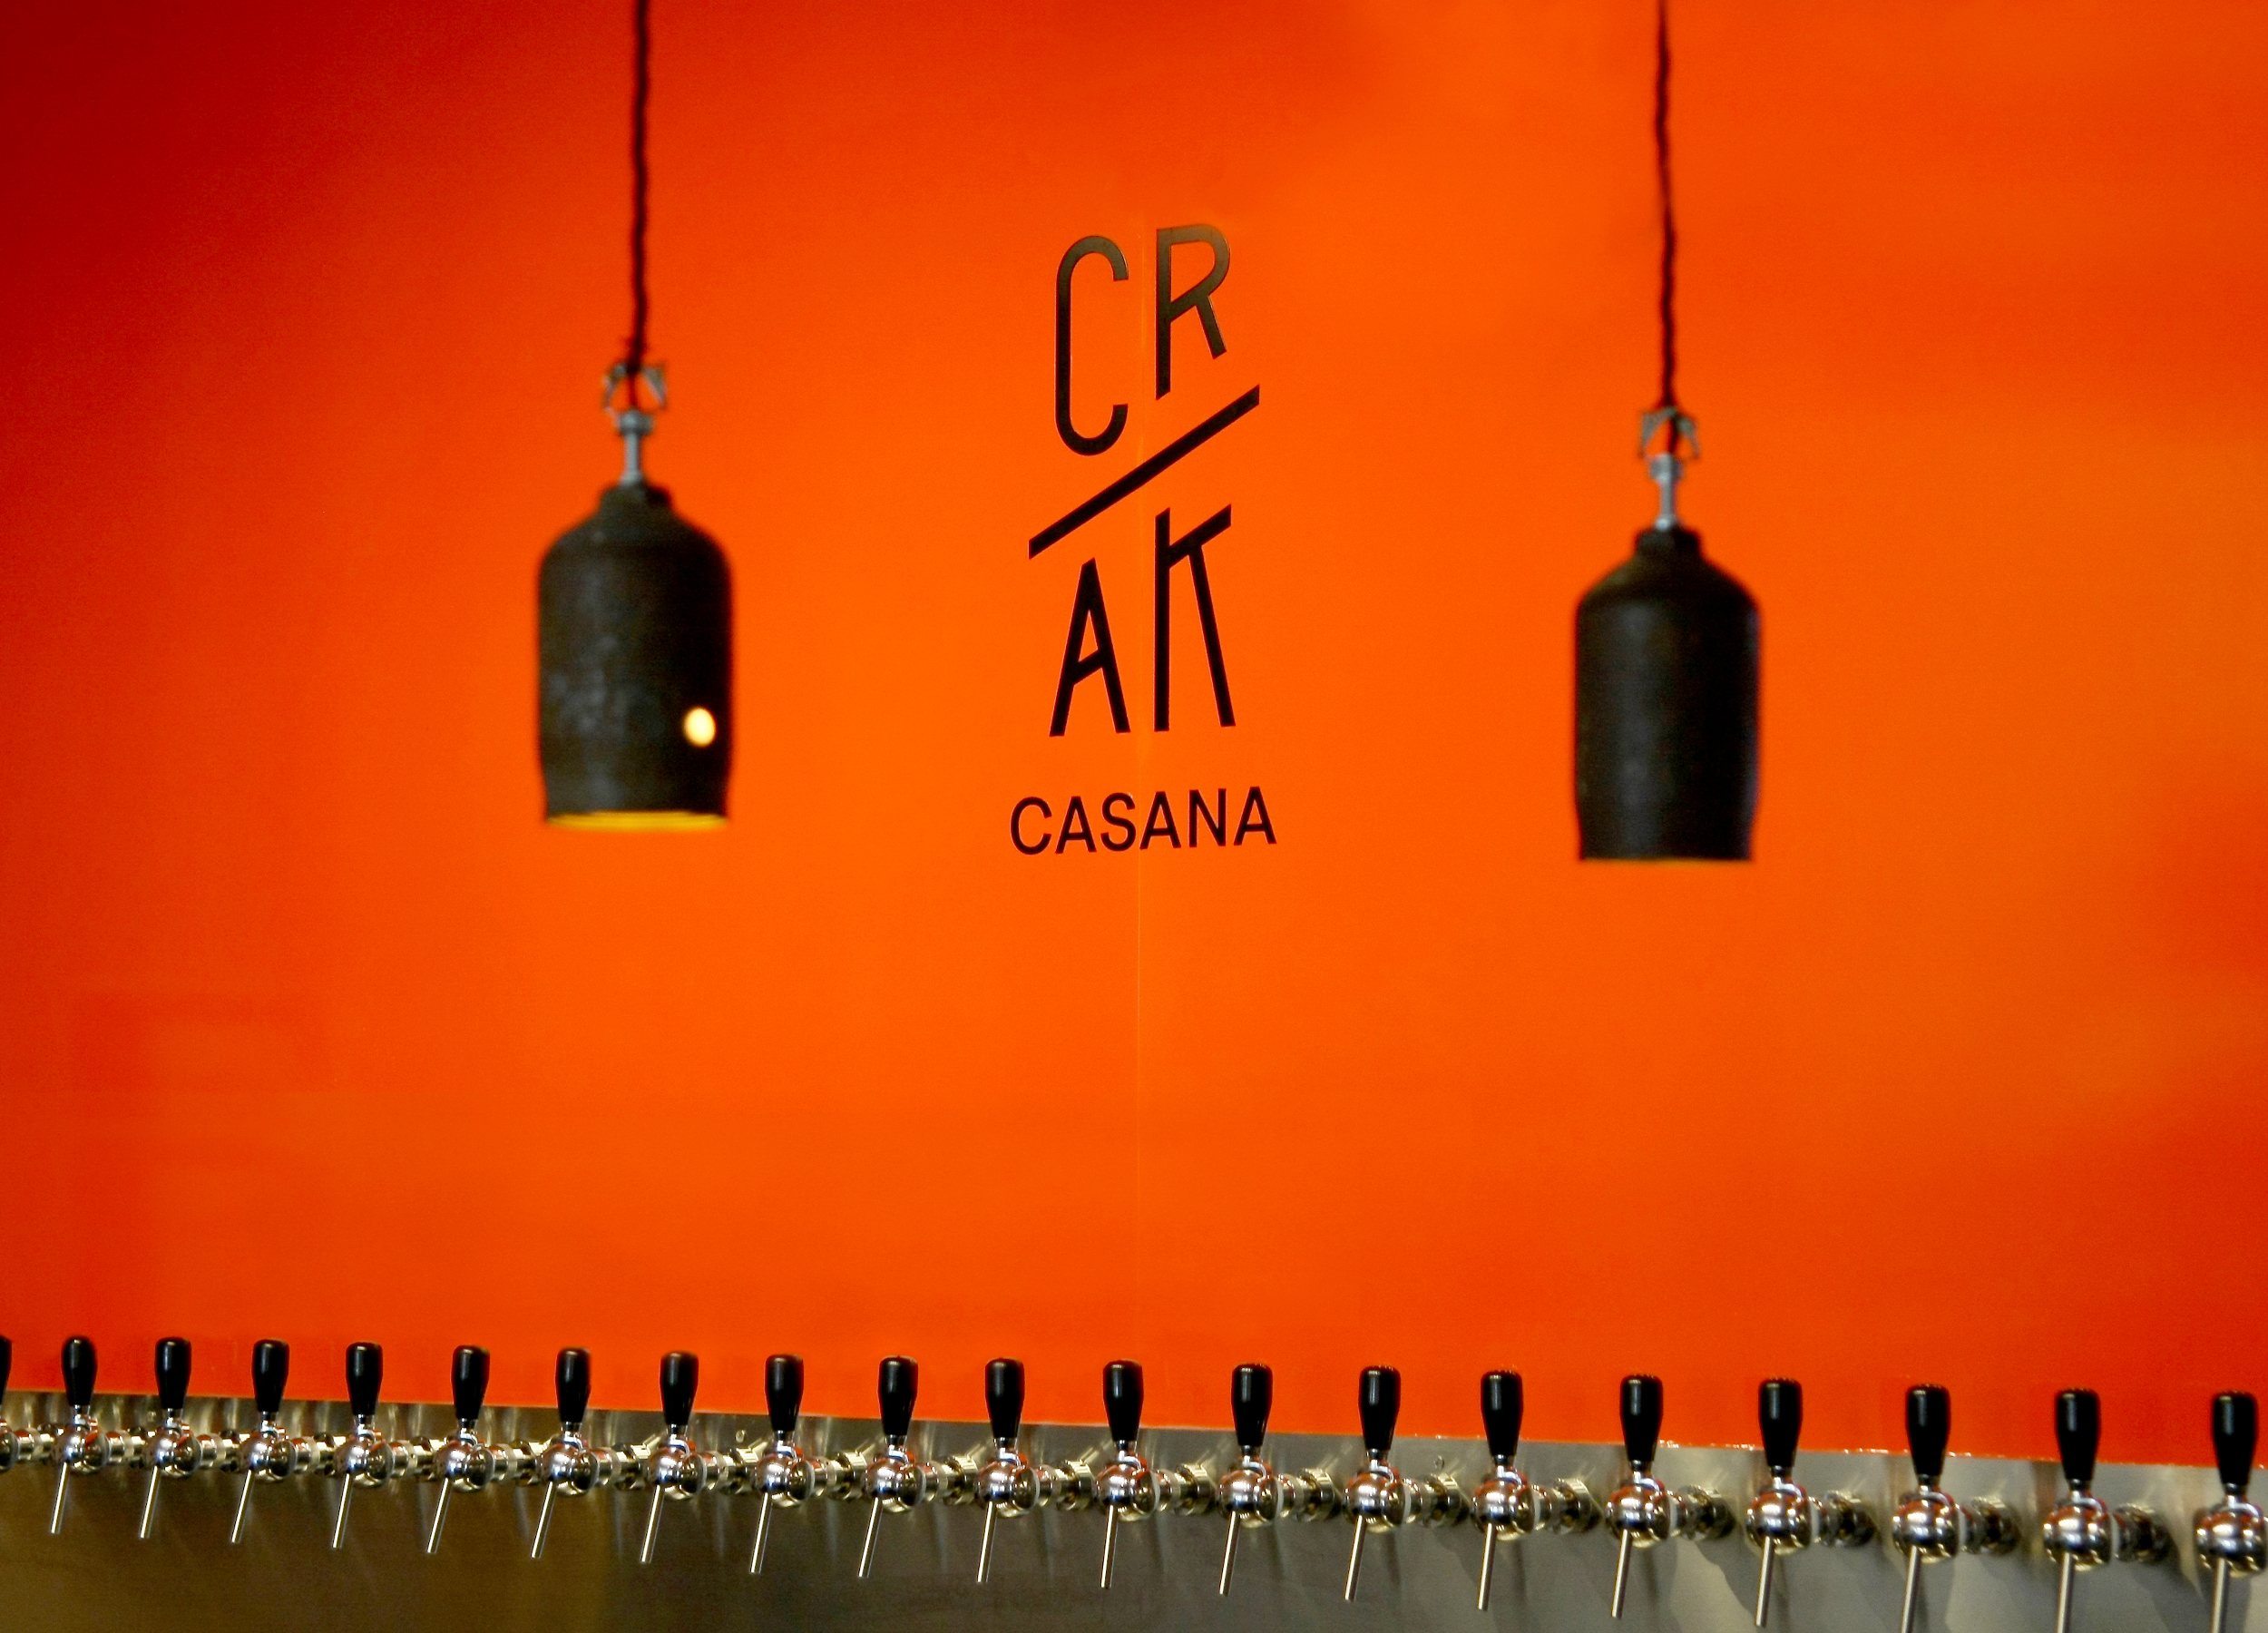 Casana 2018, CR/AK